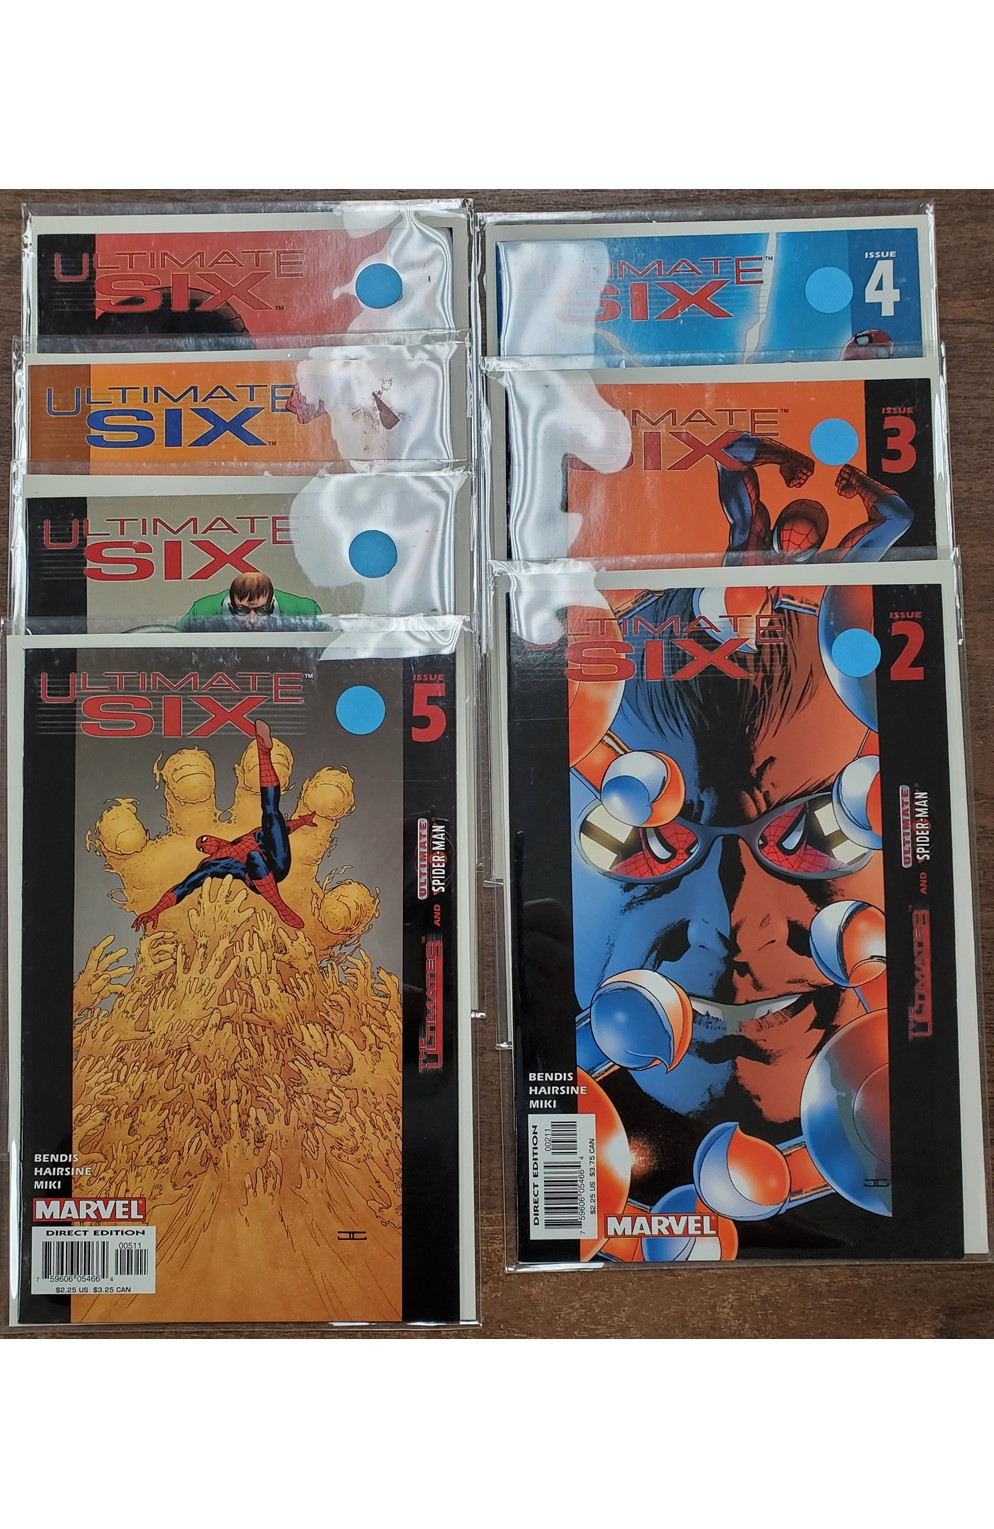 Ultimate Six #1-7 (Marvel 2003) Full Set